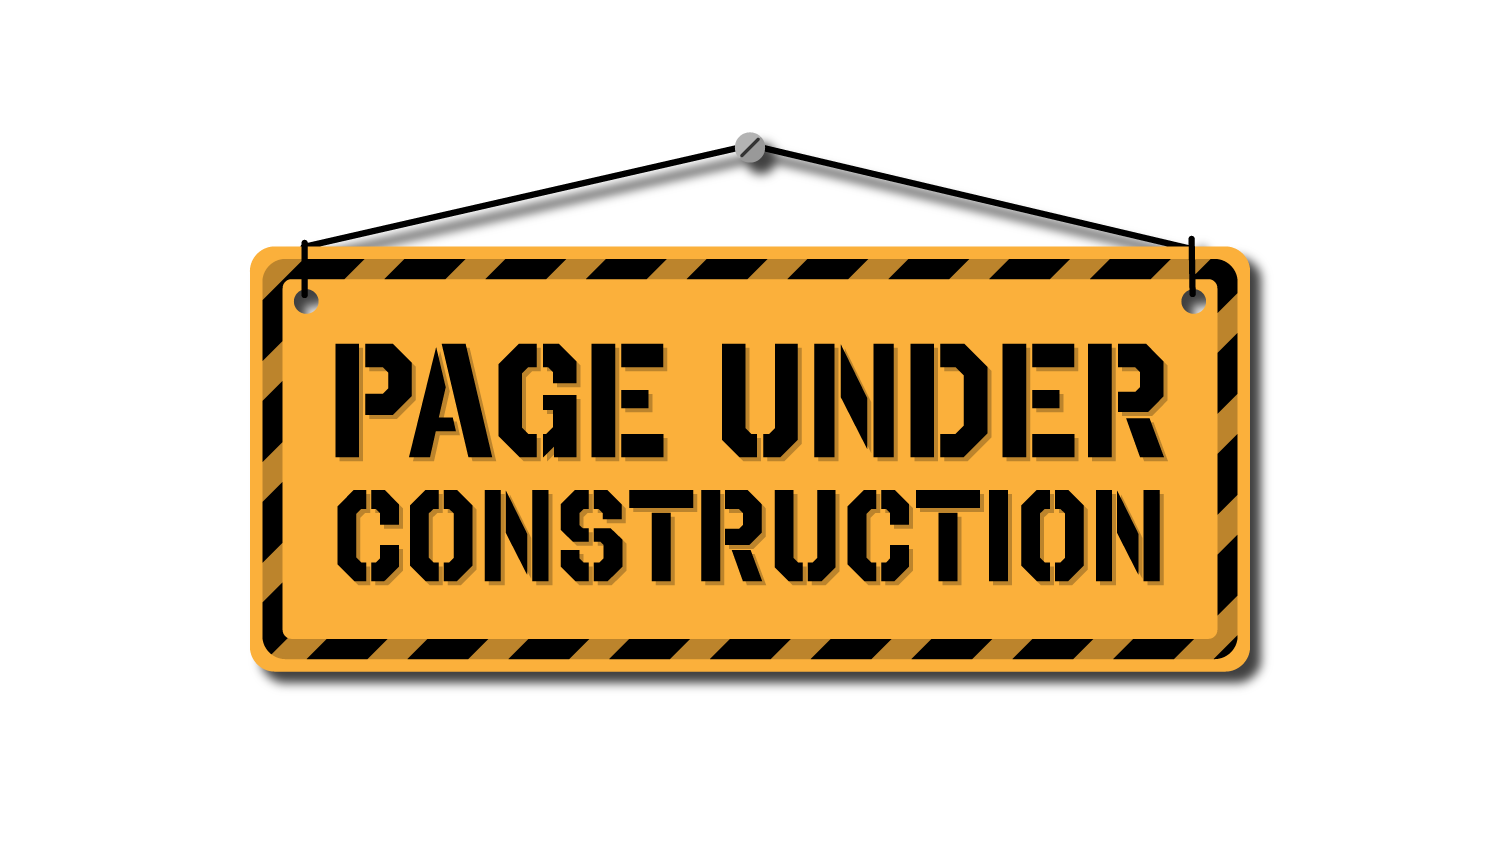 Website Construction Image